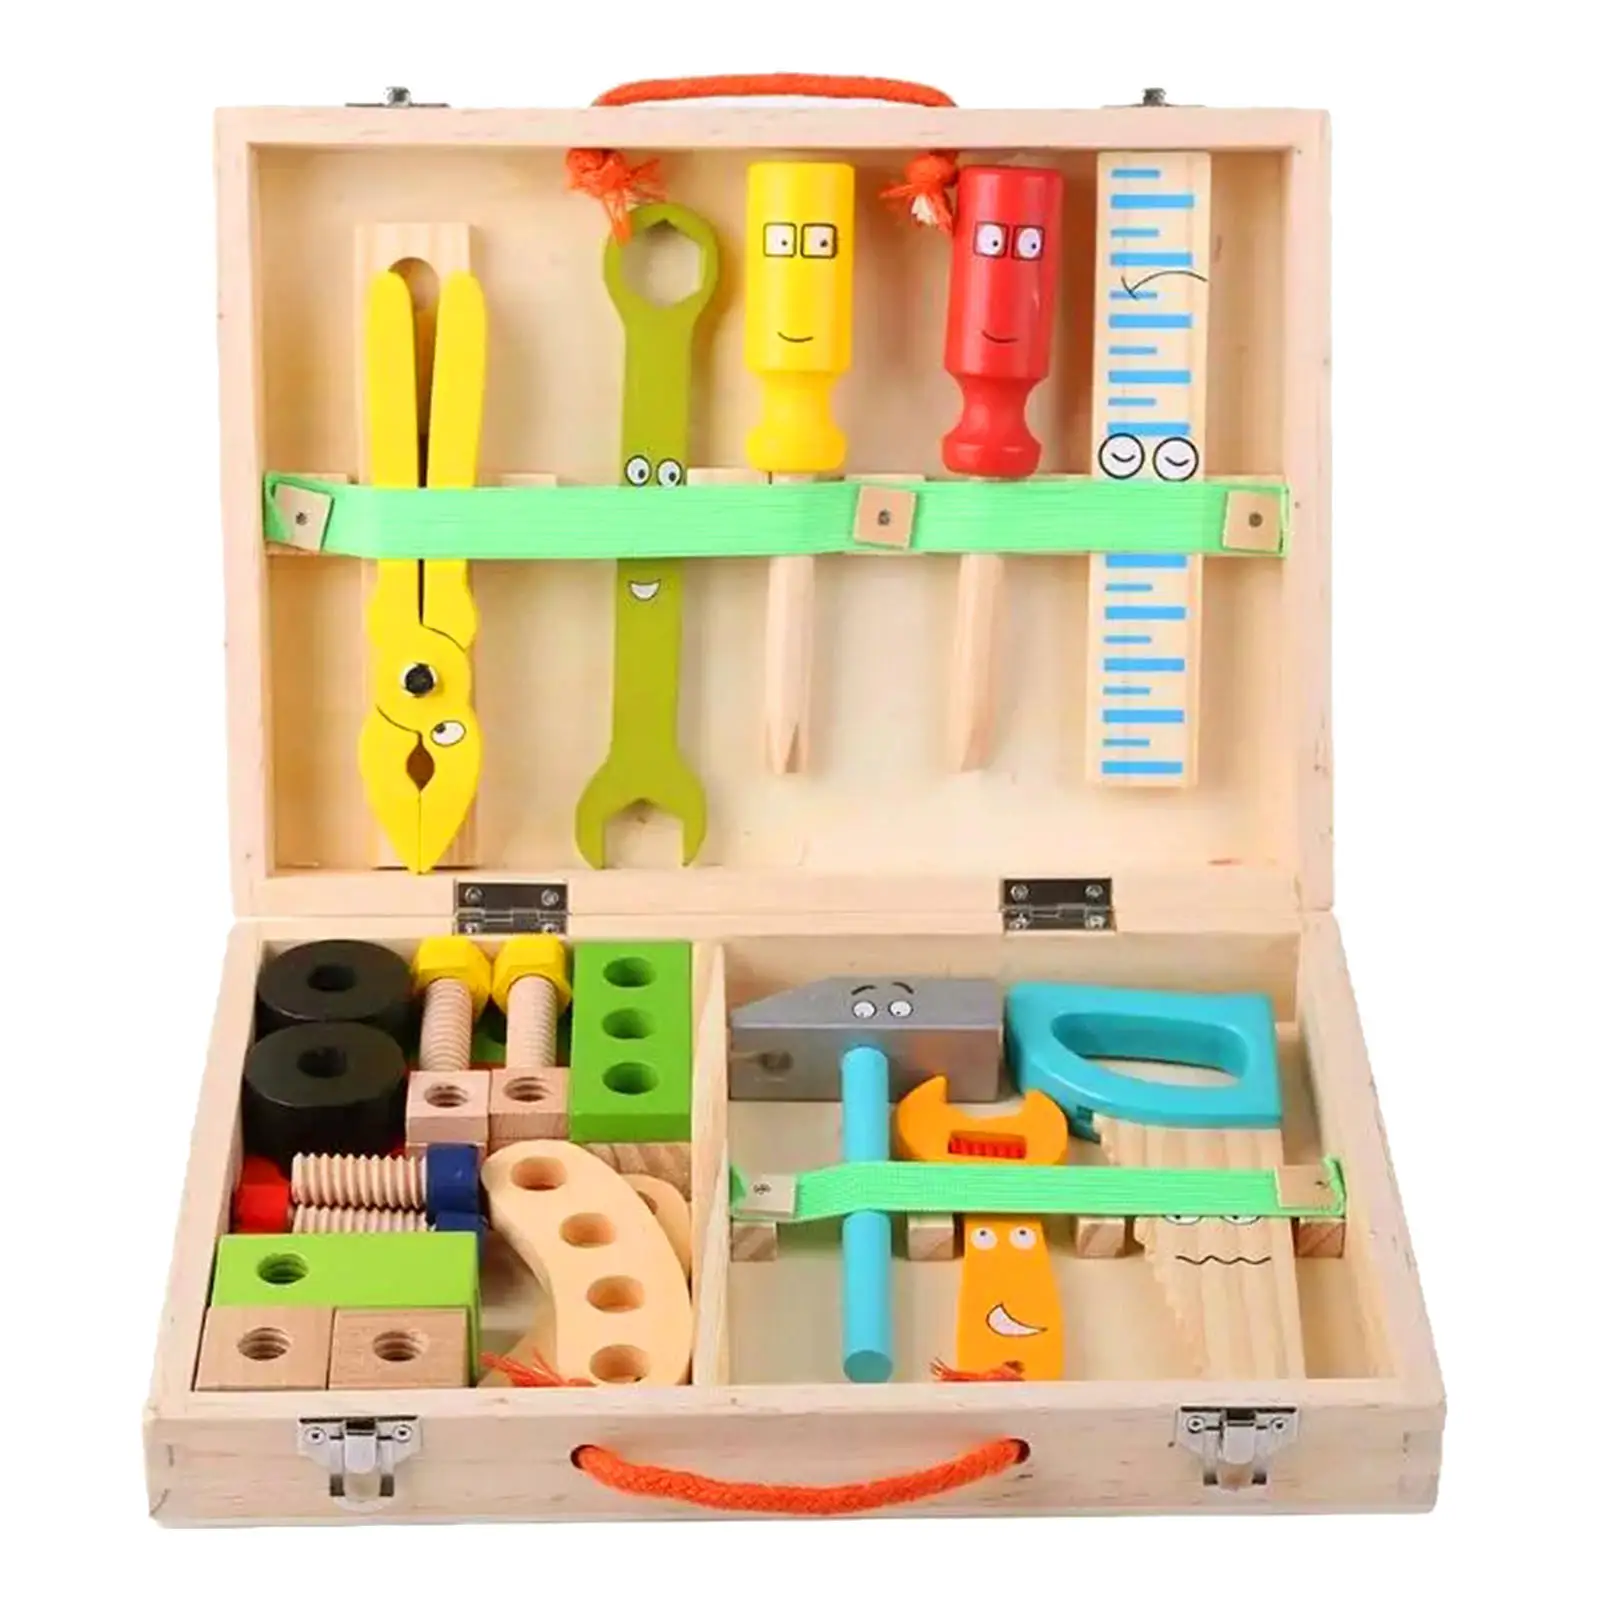 Kids Wood Repair Set Tool Assembly Toys Repair Tool Box Educational Creative Toys for Boy Girls Kids Portable